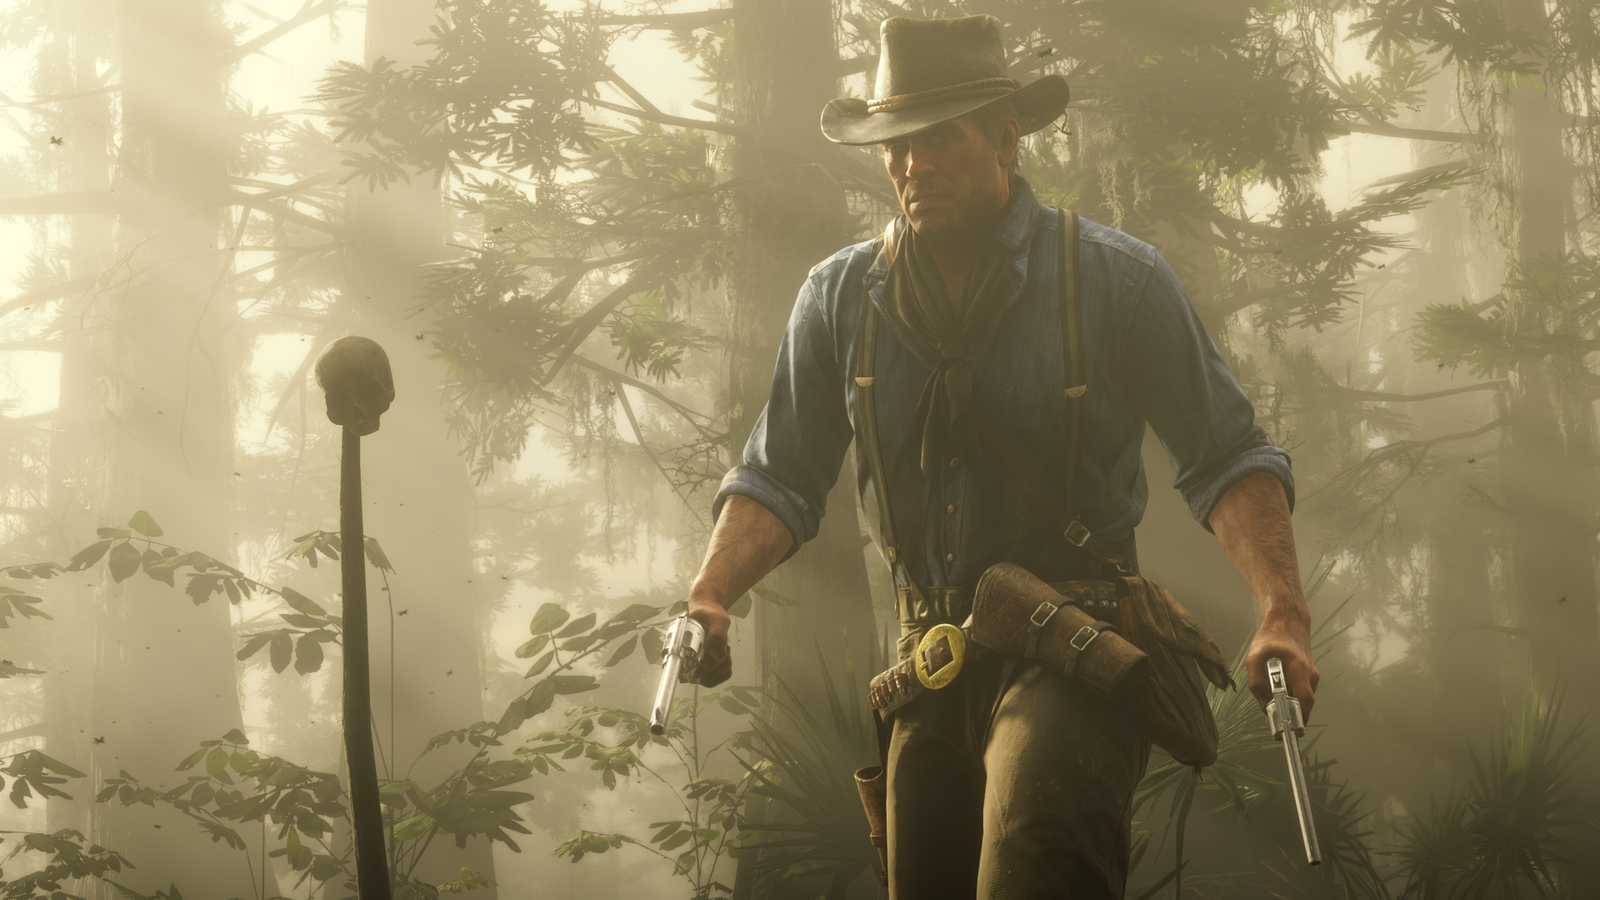 Red Dead Redemption 2 Special Edition US Rockstar Digital Download